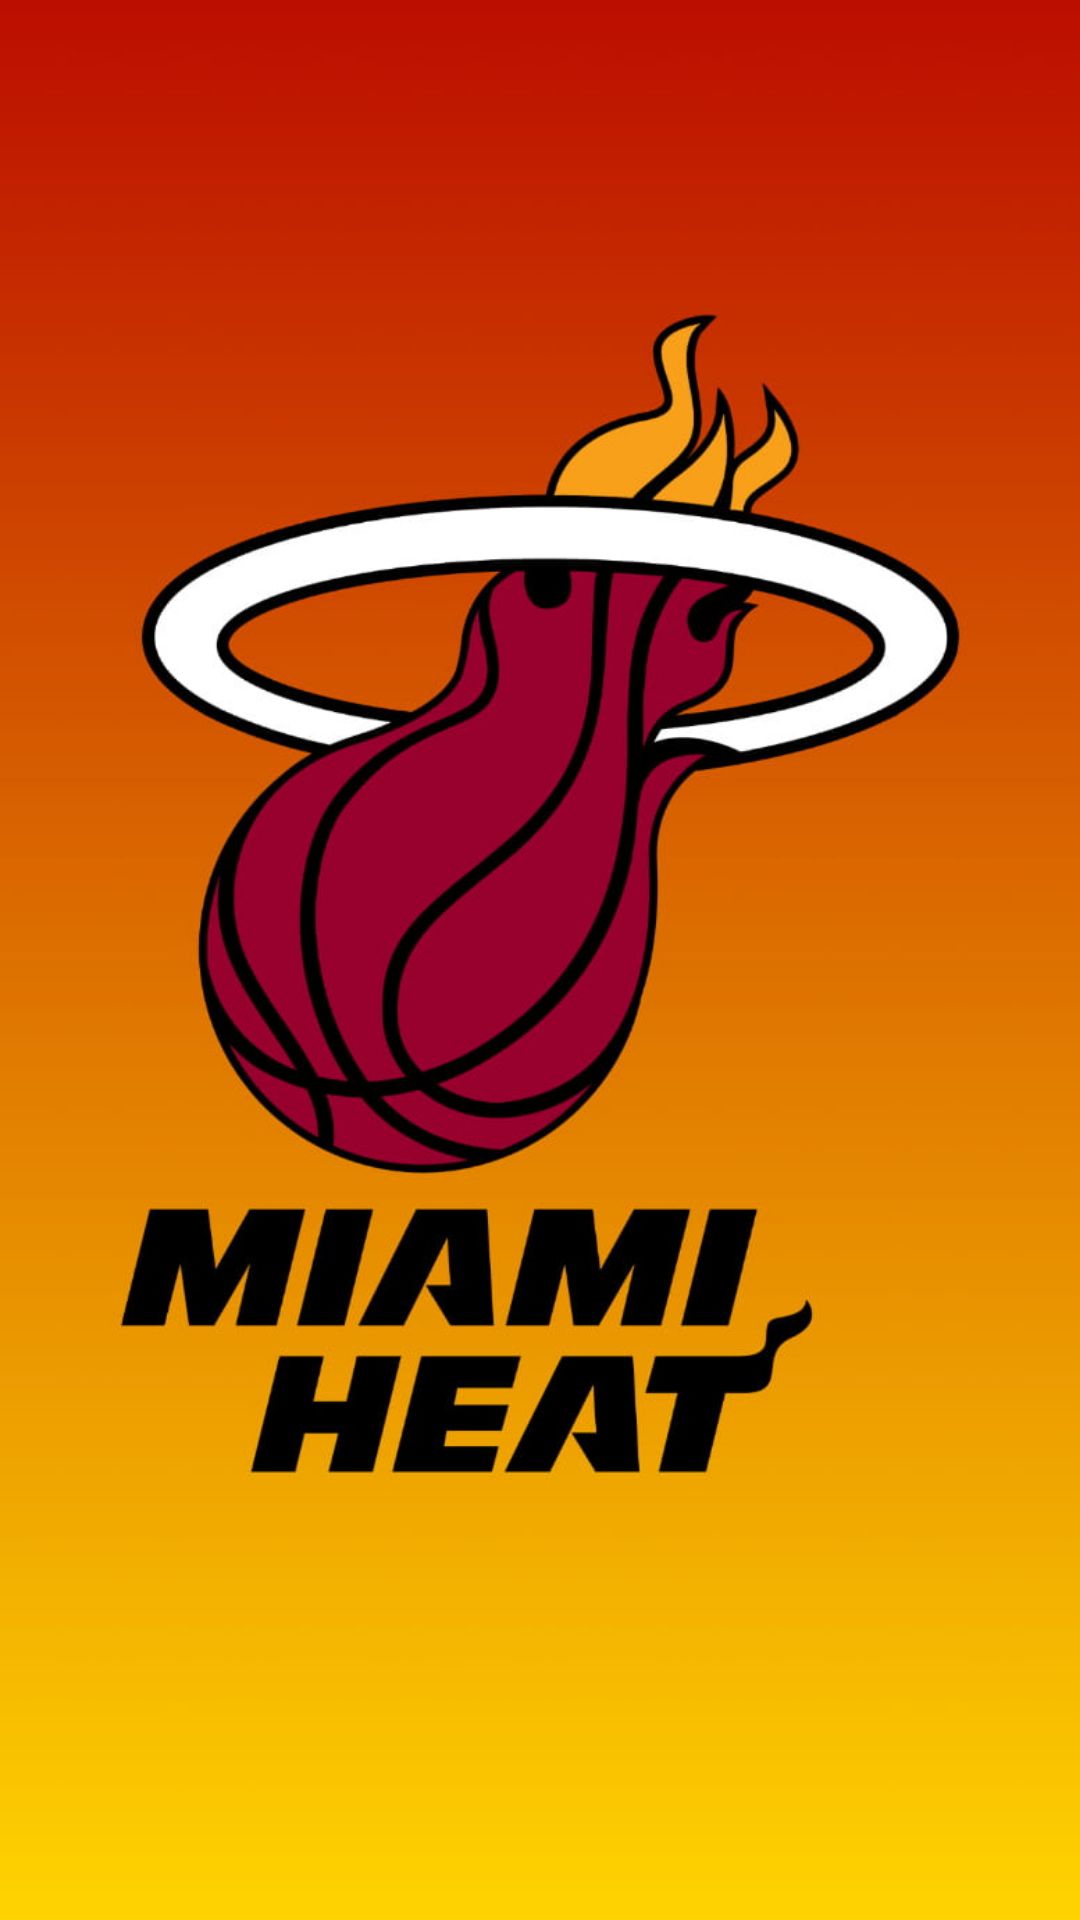 Miami Heat Wallpaper 4k. Click & Visit To Download Miami Heat Wallpaper 4k